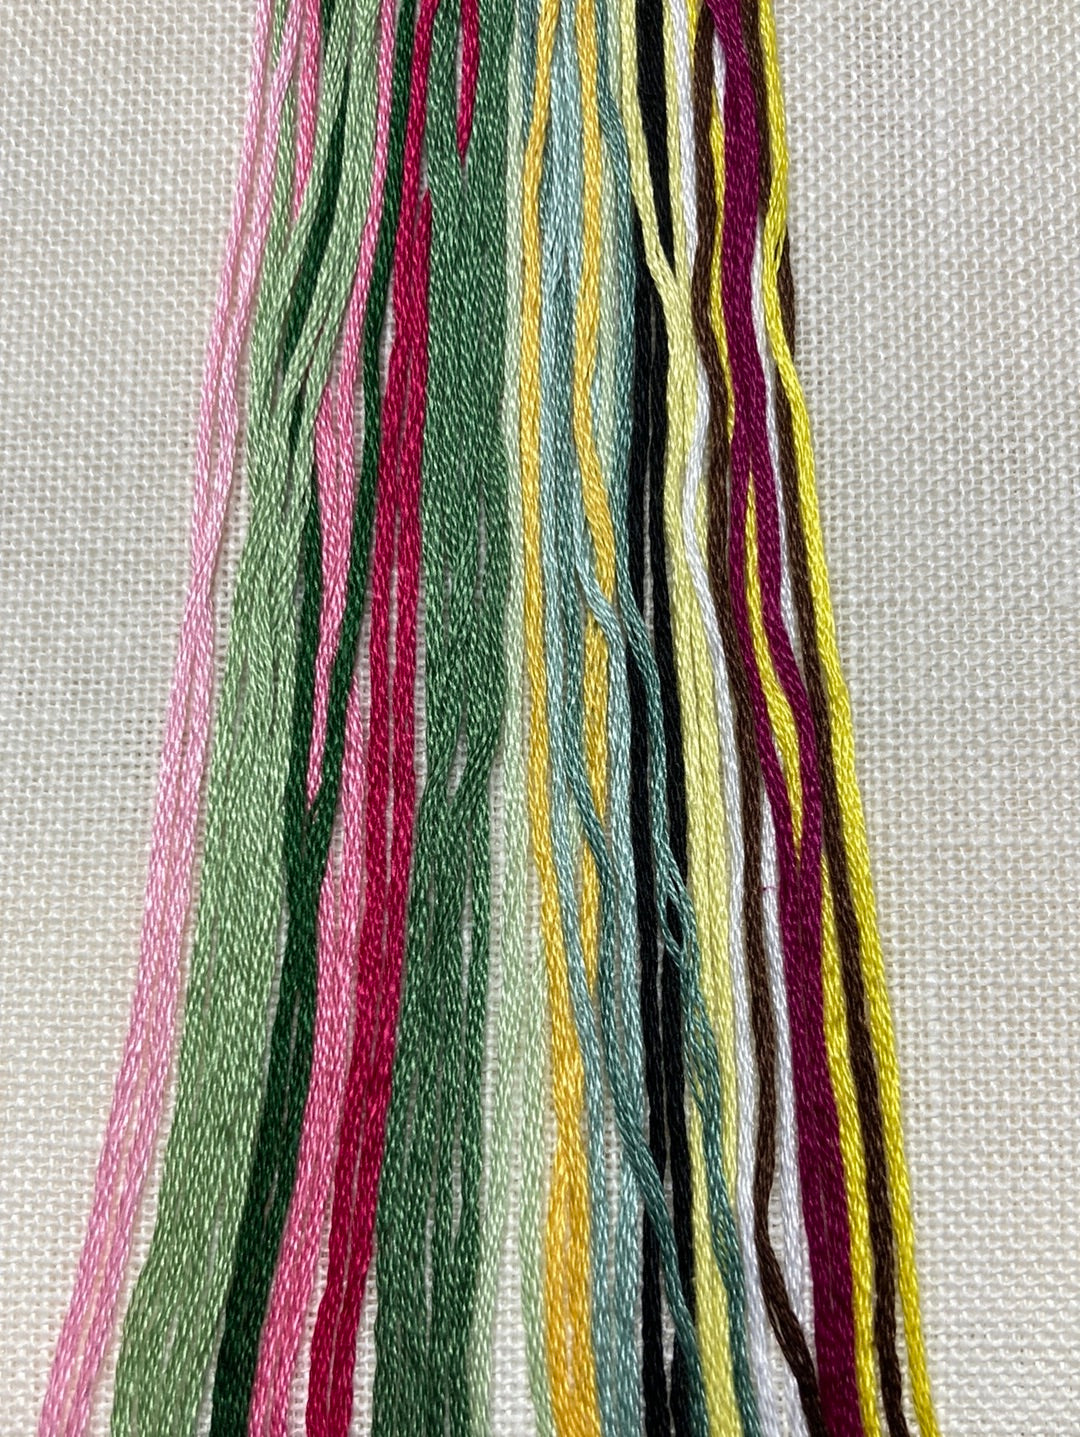 Thea Gouverneur Cross Stitch Kit (Linen) - Klaverbloem / Clover & Butterfly988